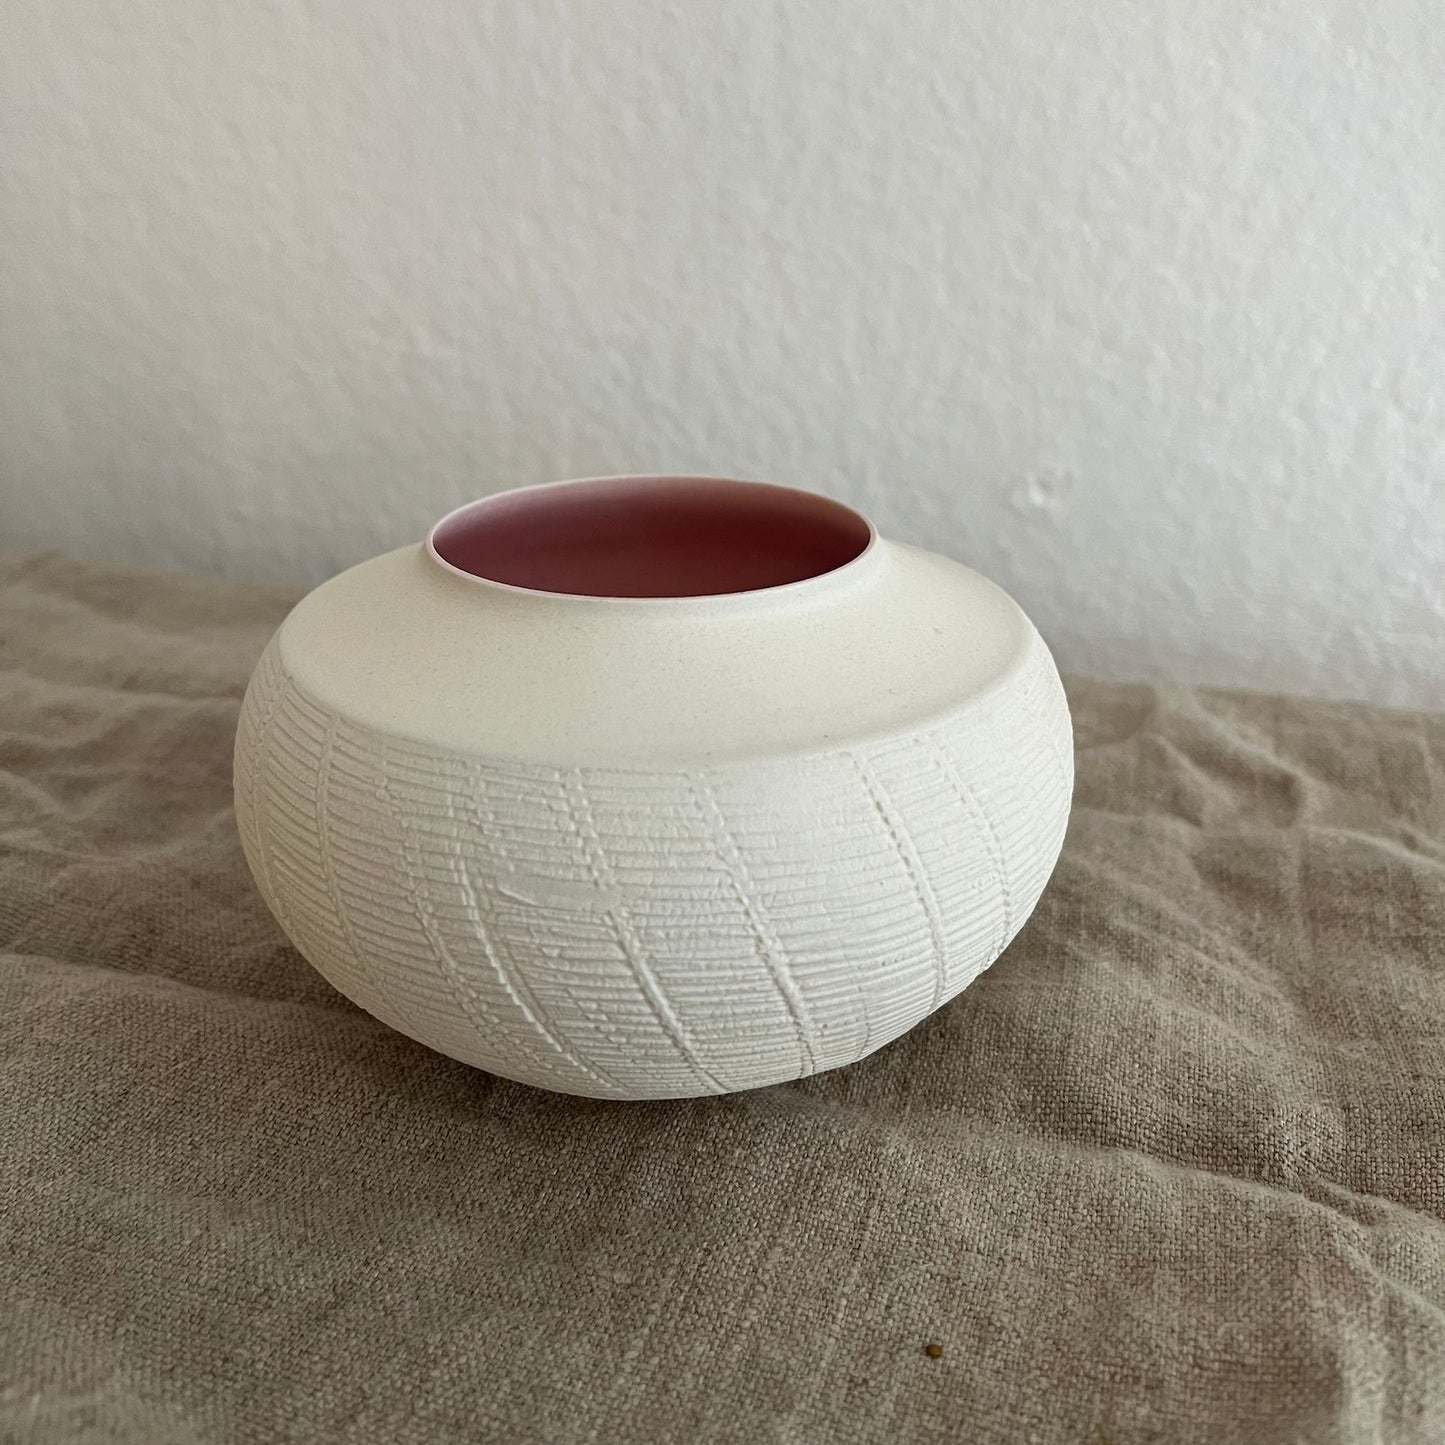 Porcelain Vessel Beta by Rondell Meeks